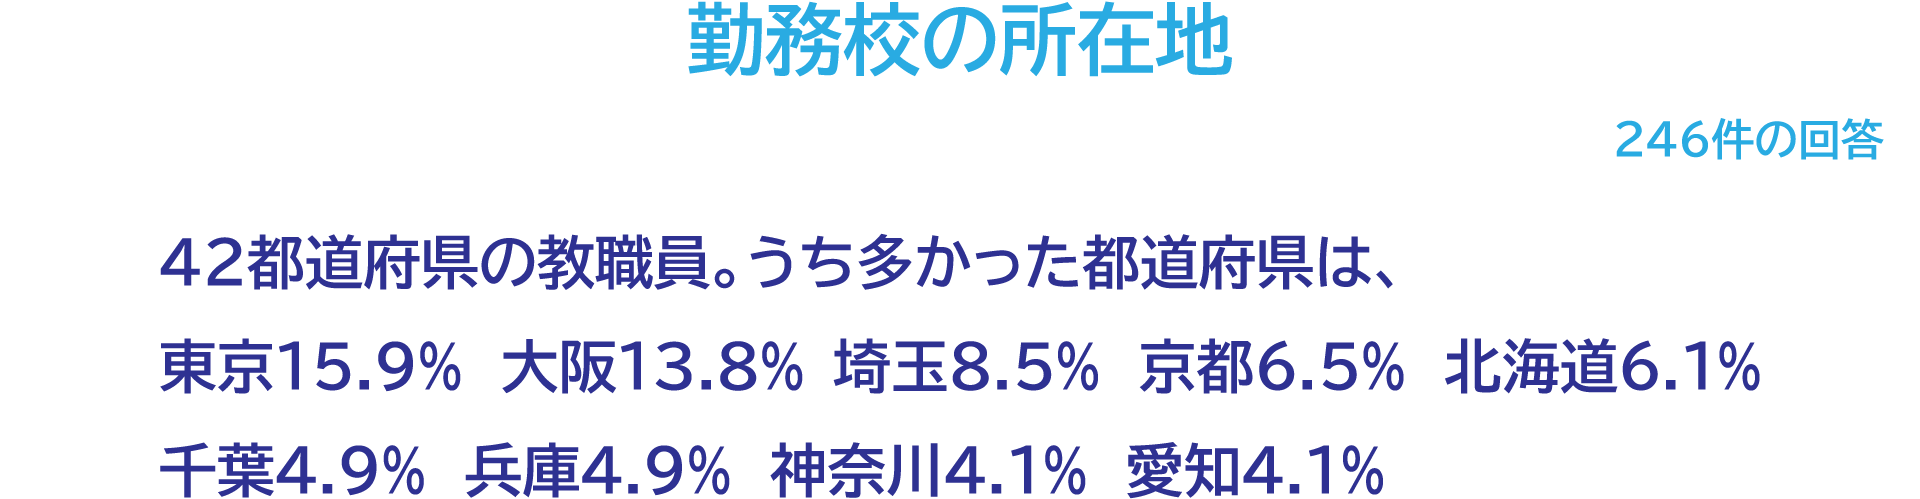 ■勤務校の所在地　42都道府県の教職員。うち多かった都道府県は、東京15.9%　大阪13.8%　埼玉8.5%　京都6.5%　北海道6.1%　千葉4.9%　兵庫4.9%　神奈川4.1%　愛知4.1%